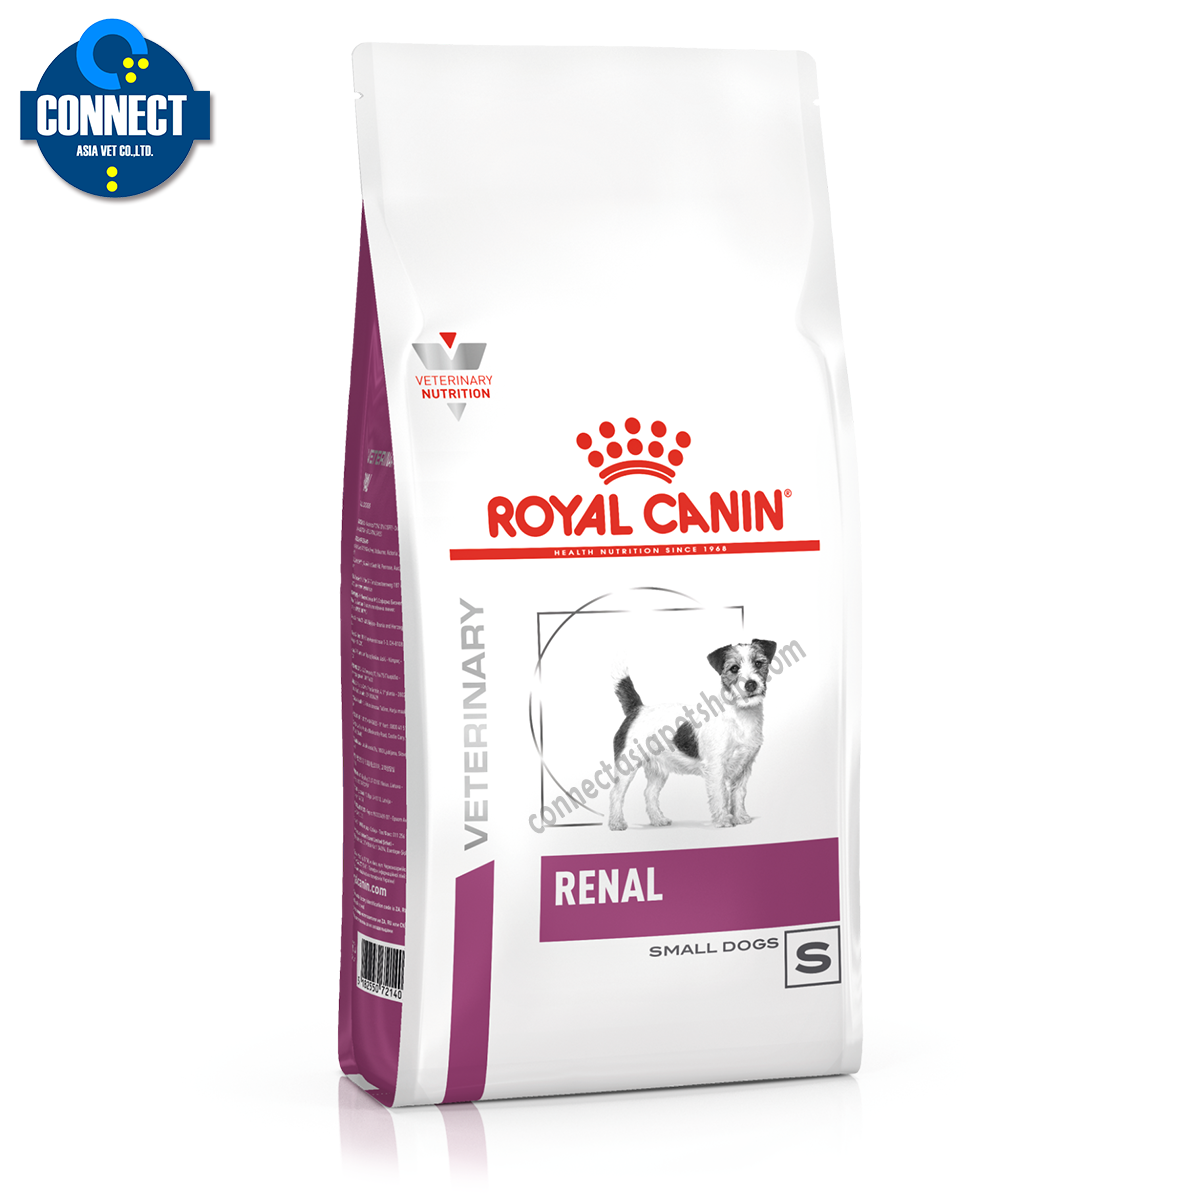 Royal Canin RENAL SMALL DOGS สุนัขพันธุ์เล็กโรคไต ขนาดถุง ( 400 g , 1.5 kg , 3.5 kg. )